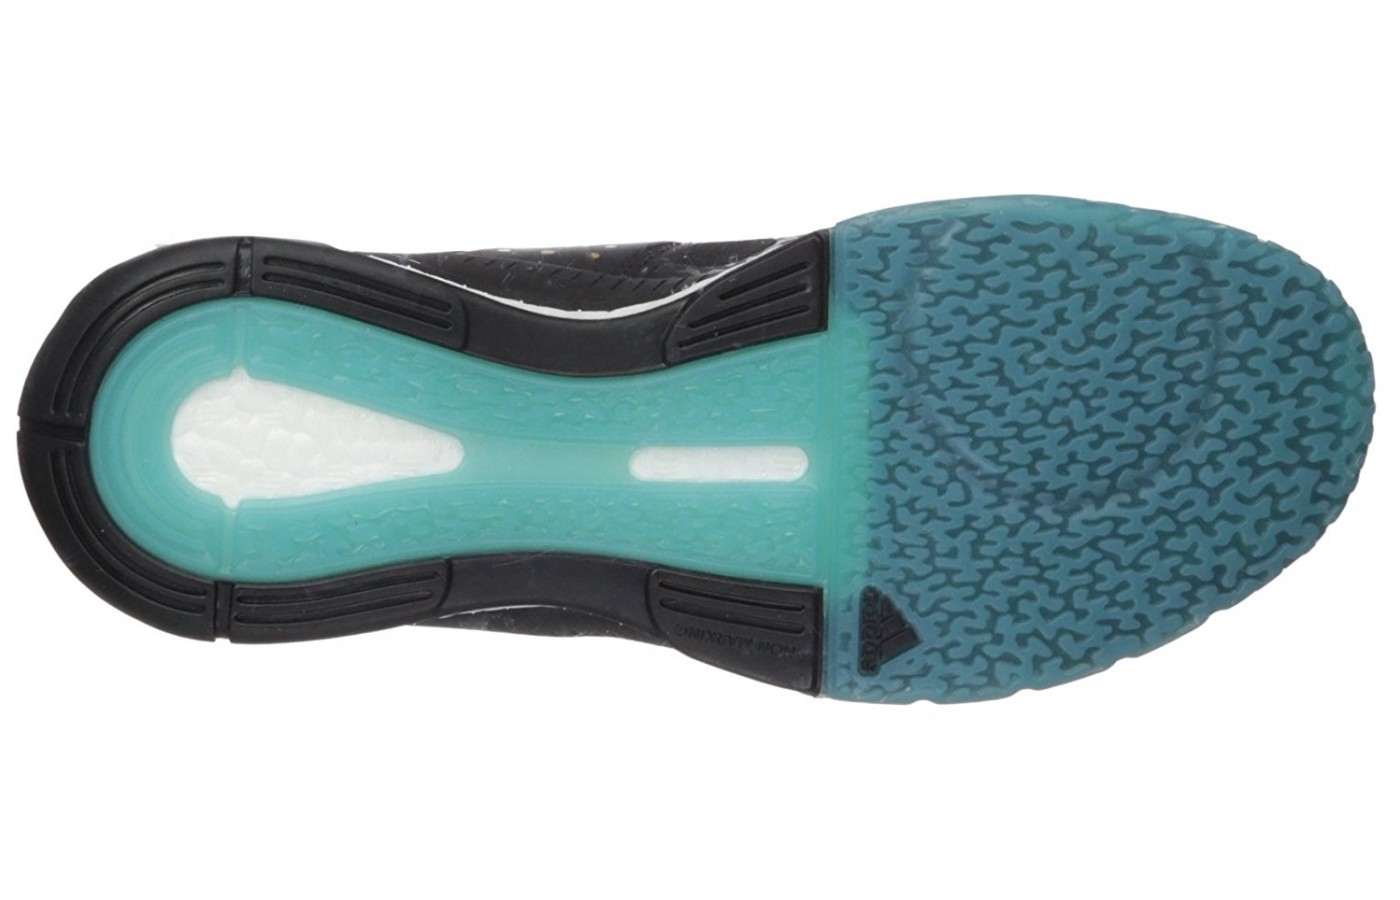 Adidas CrazyFlight sole